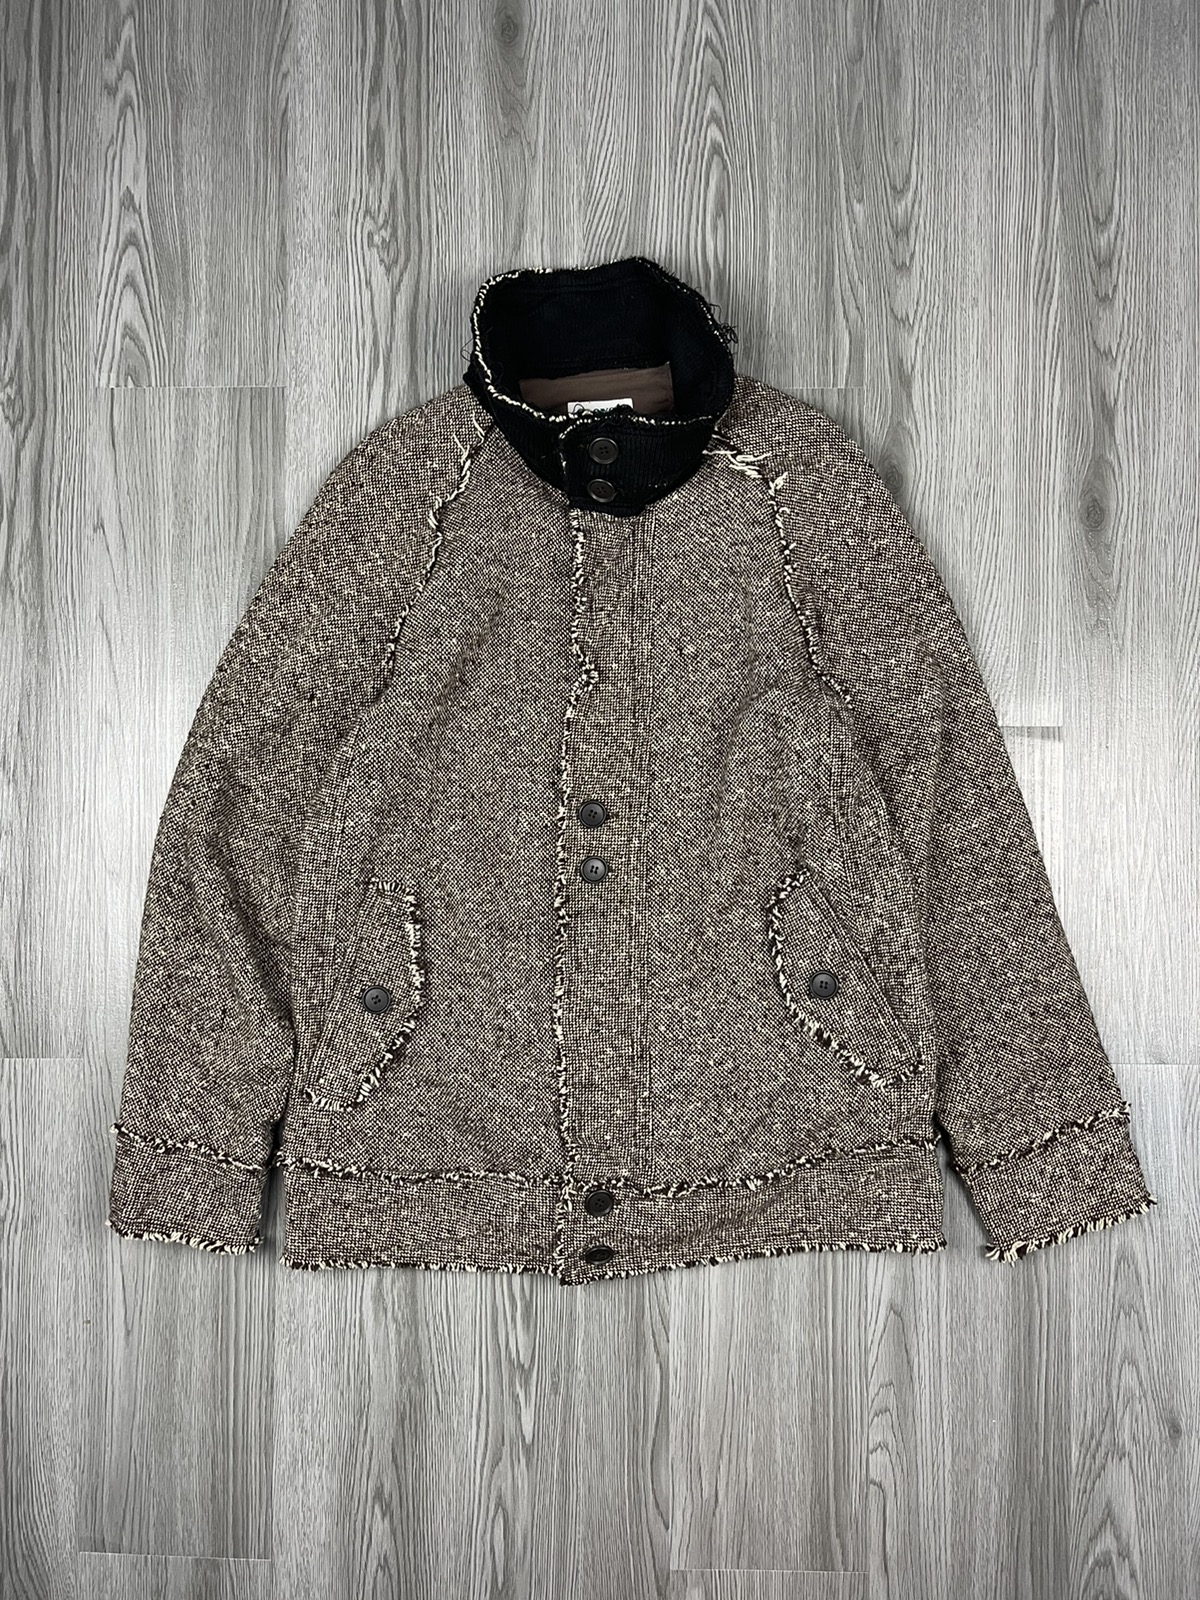 Japanese Brand - Boys Room japan rugged design stylo jacket - 1